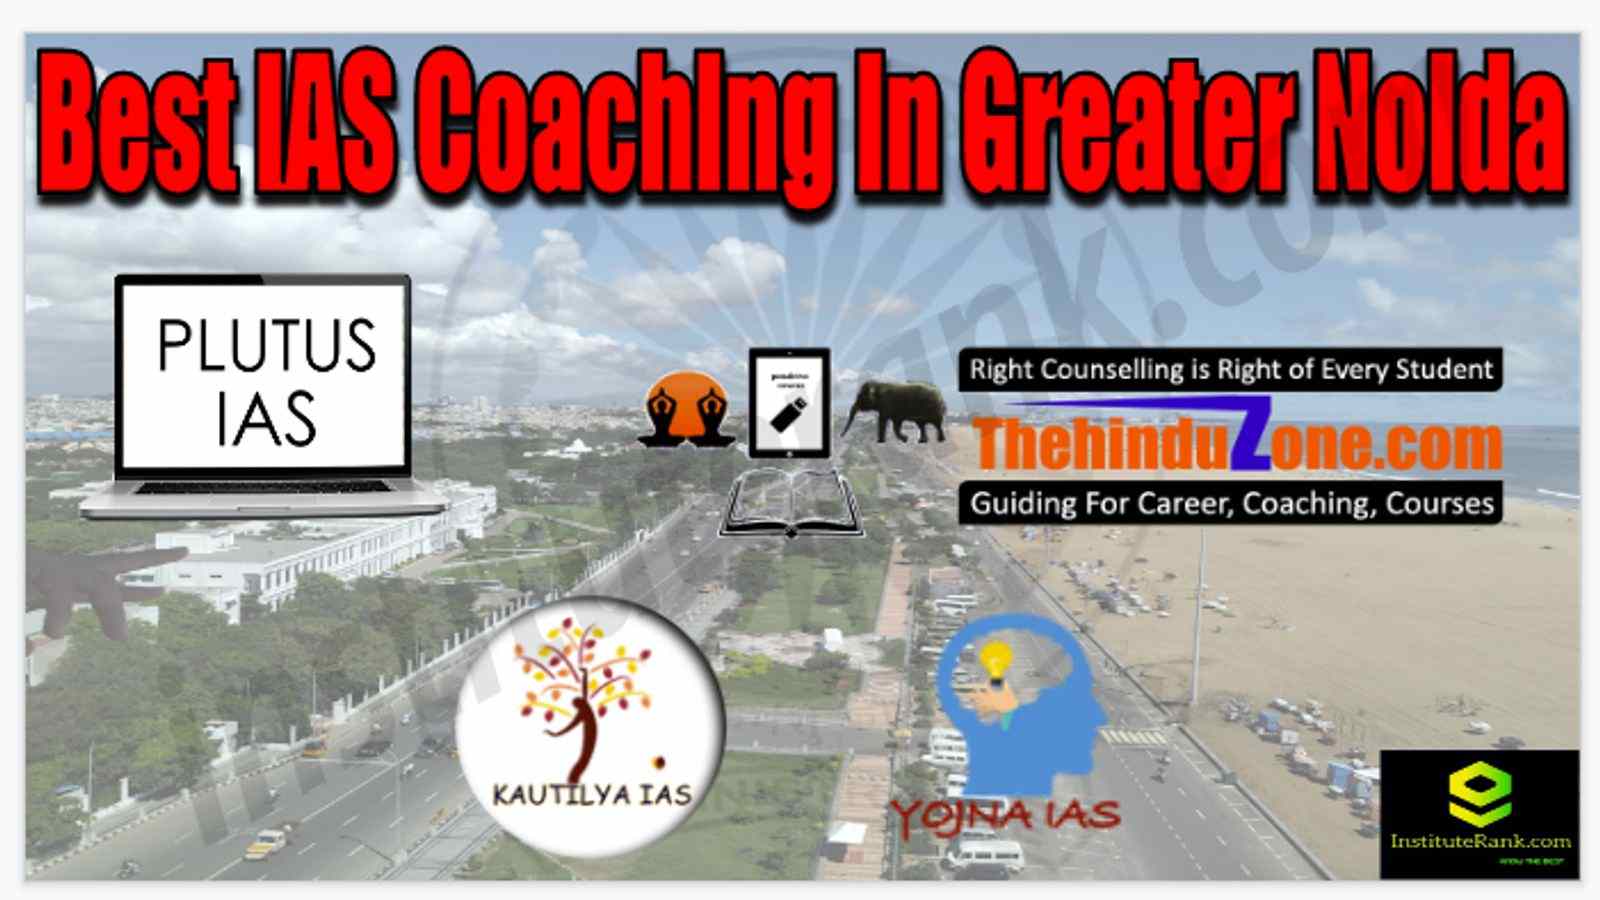 Best IAS Coaching in Greater Noida